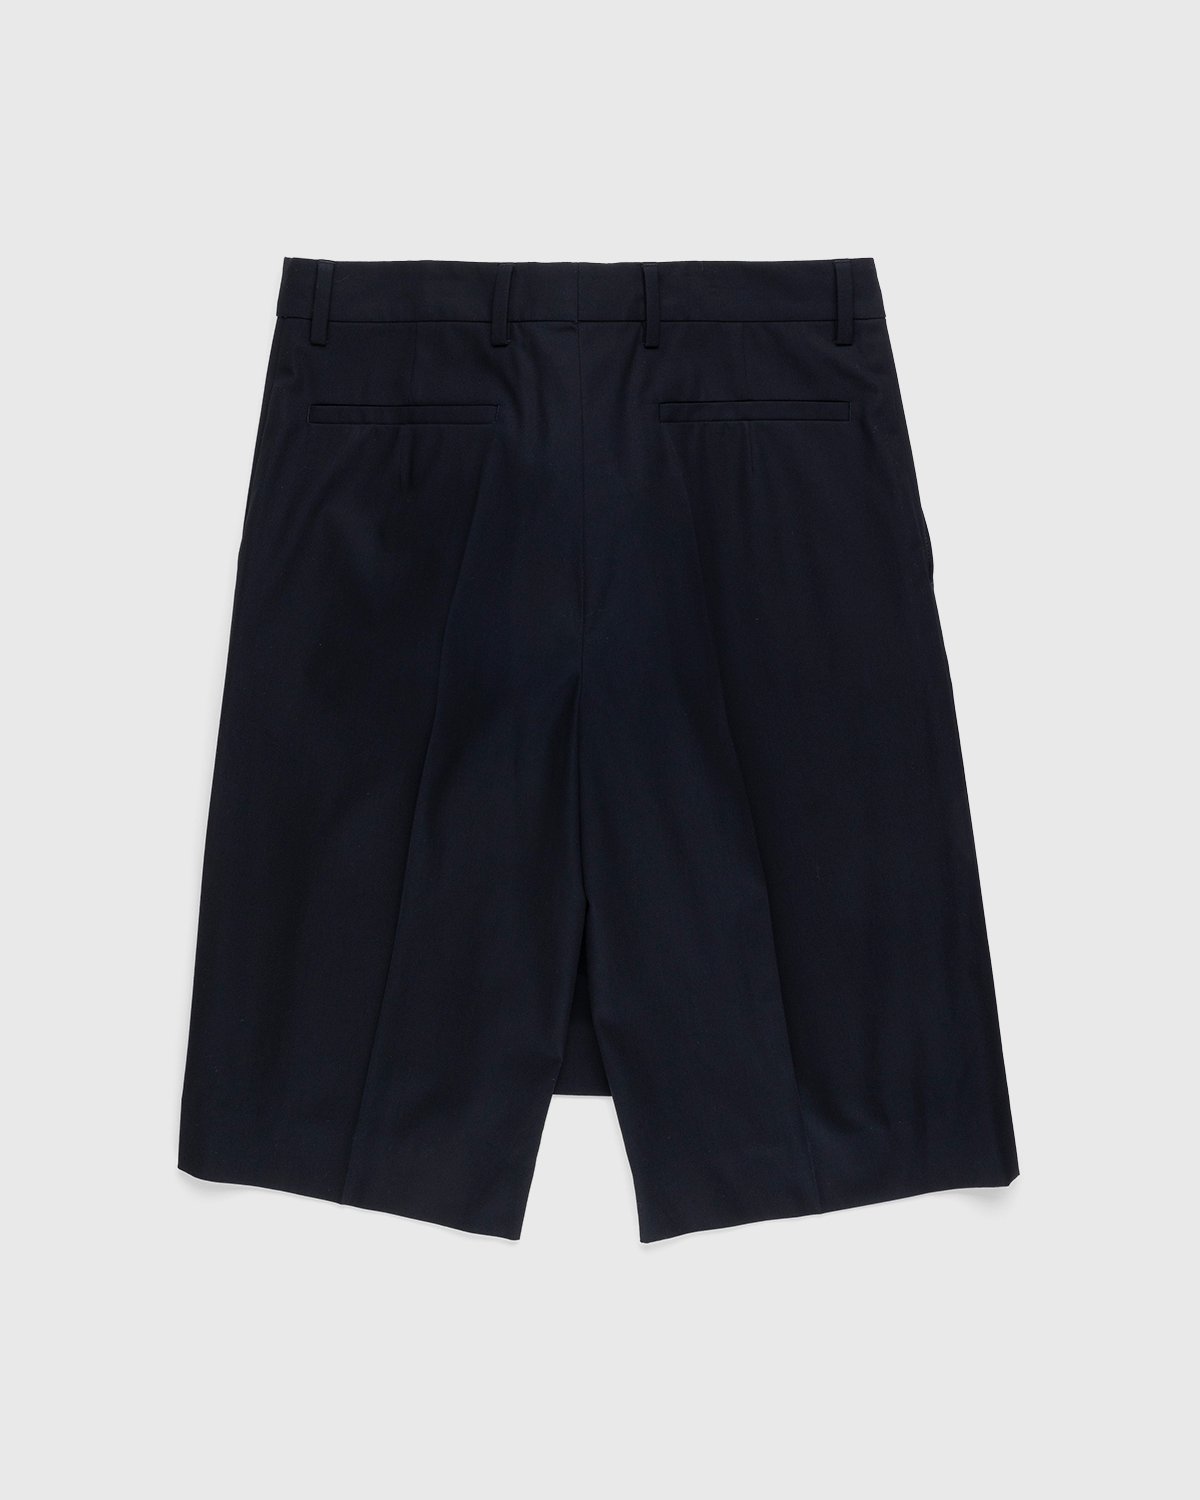 Dries van Noten - Parwin Shorts Navy - Clothing - Blue - Image 2